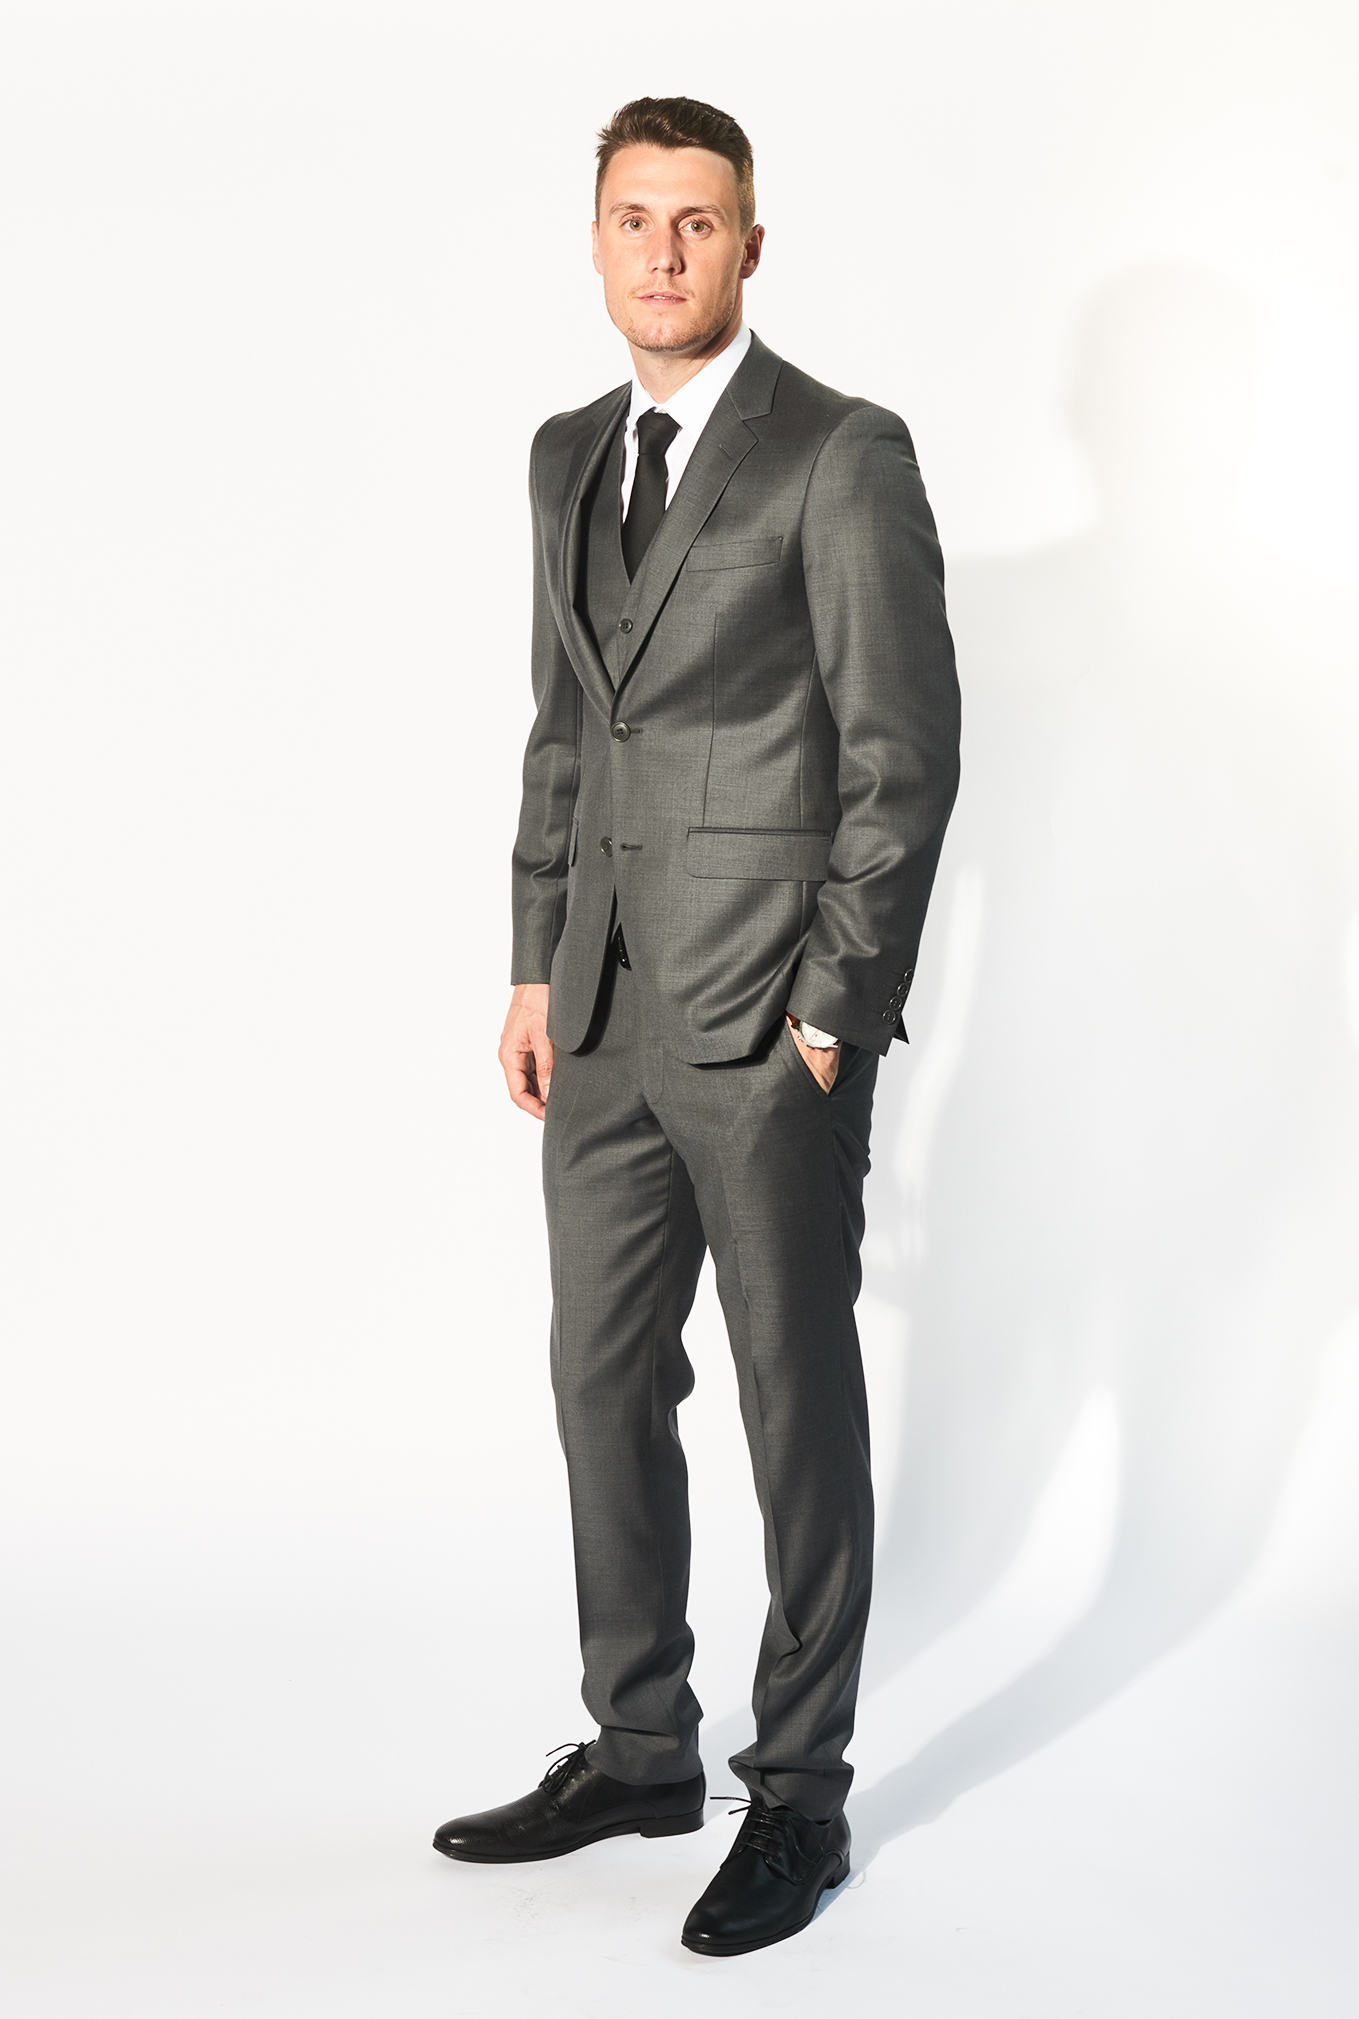 The Daniel grey suit side view